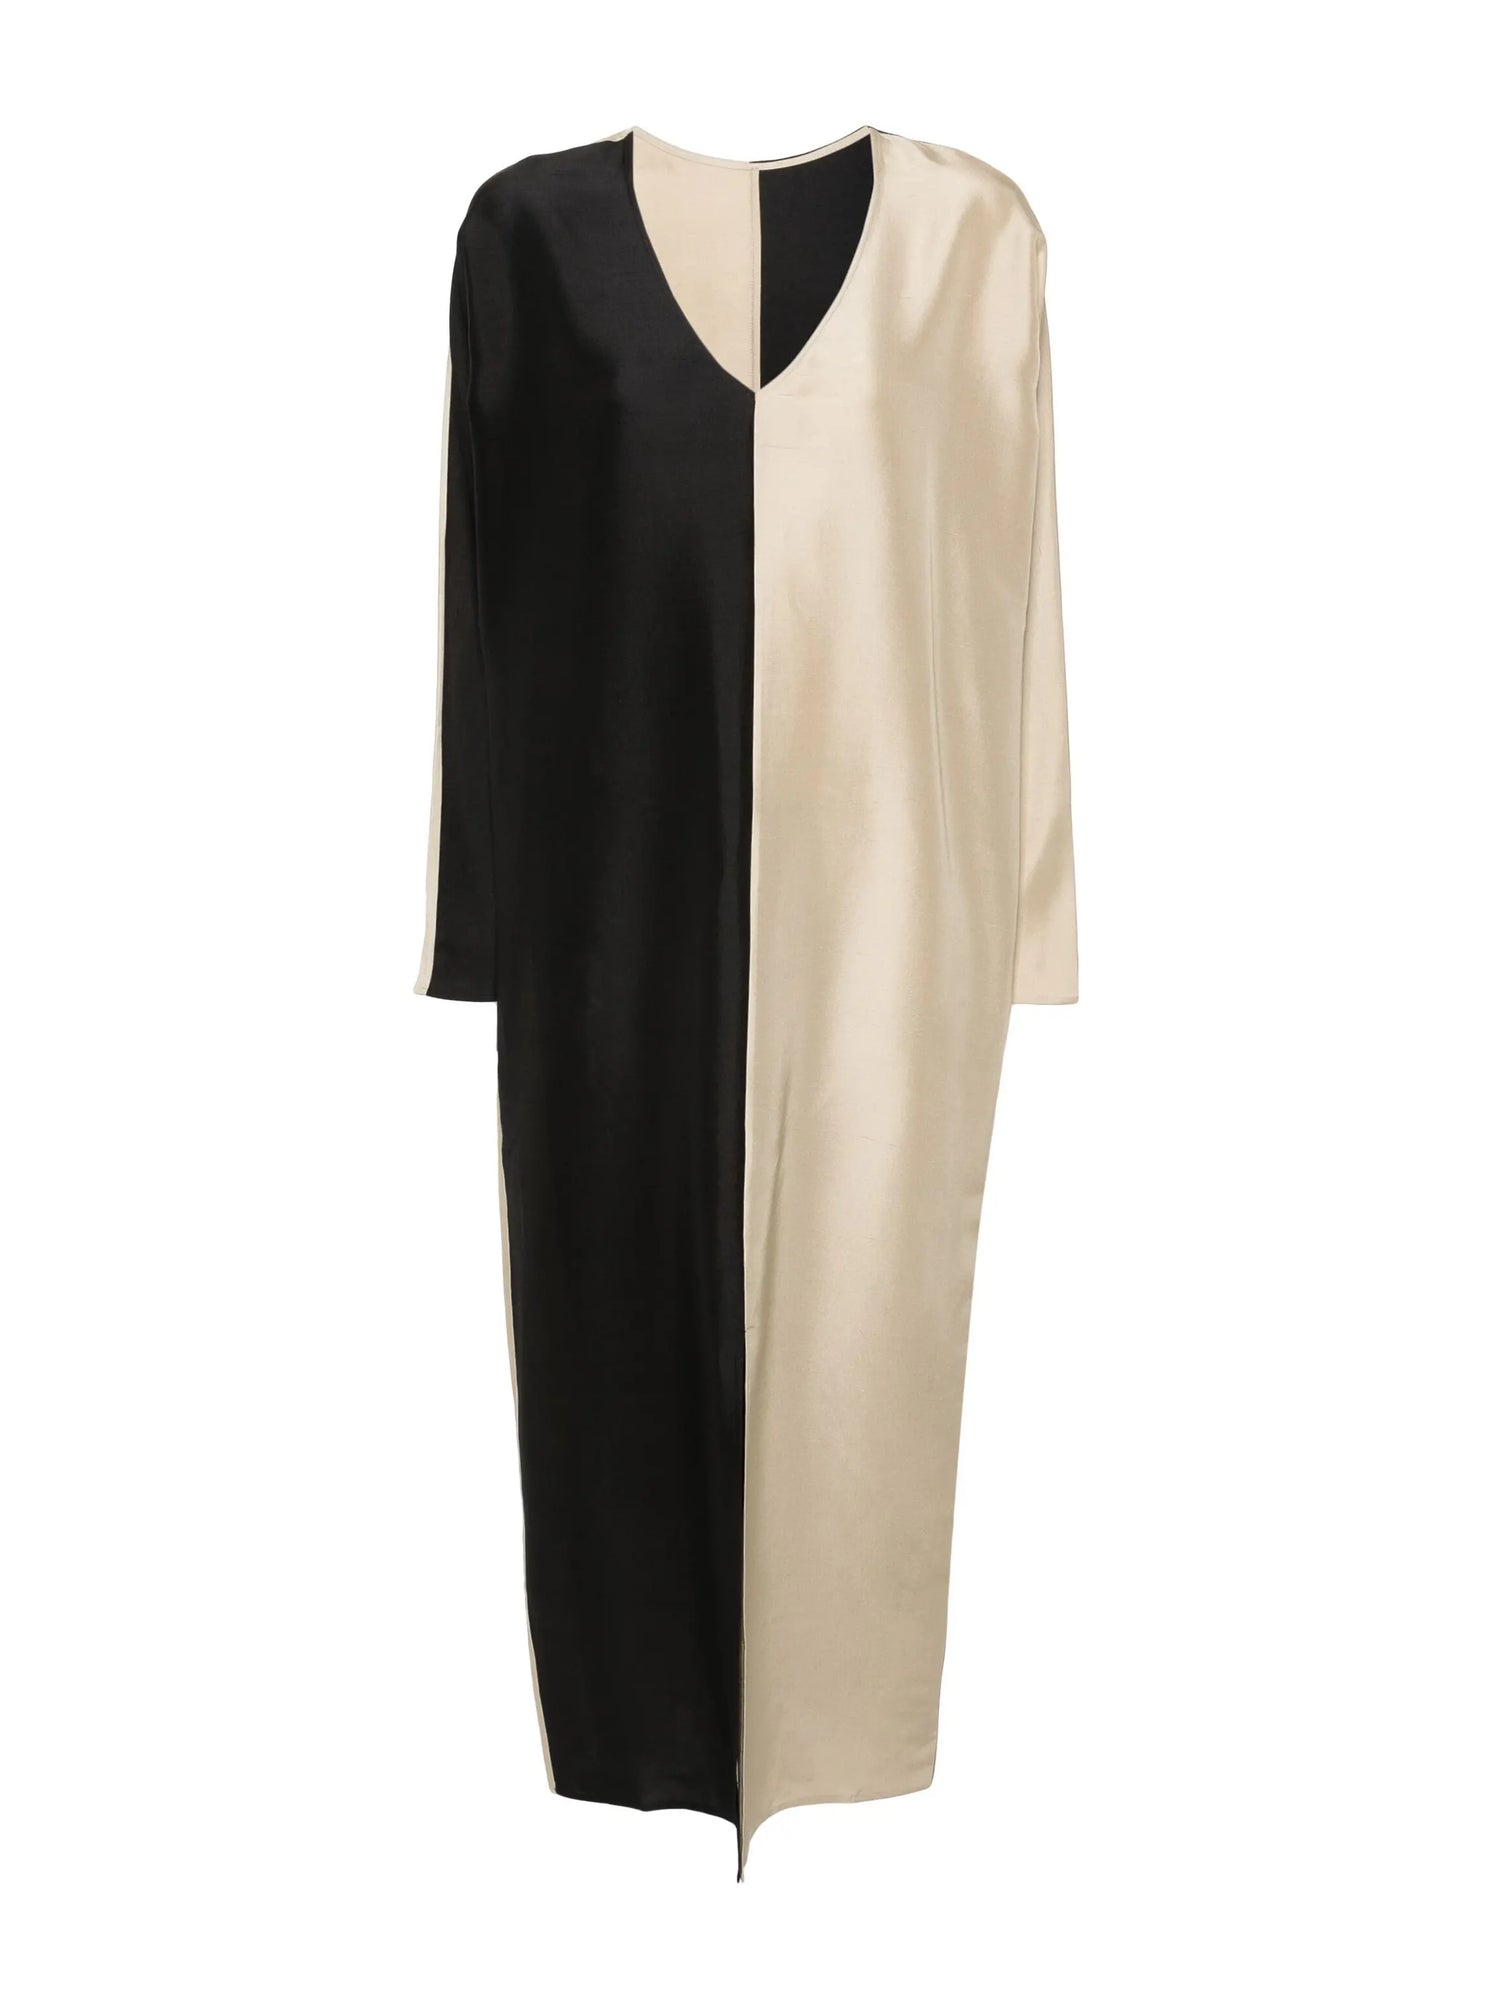 LUCINE colour-block silk dress, black-beige